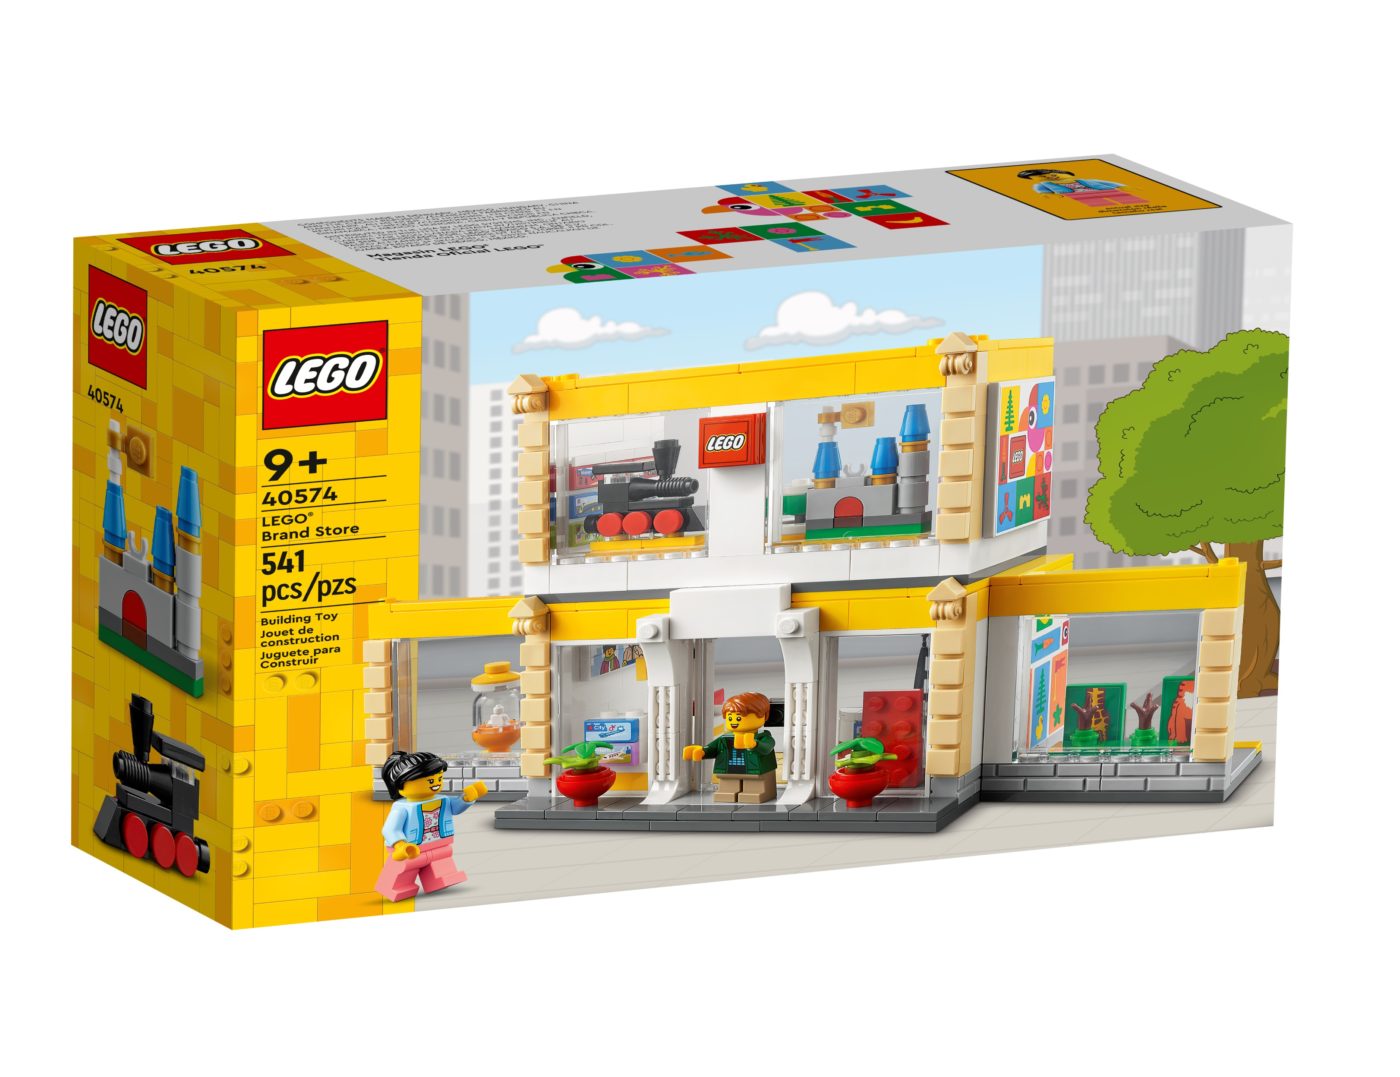 Moderat Abe dukke Review: 40574 LEGO Brand Store (2022) - Jay's Brick Blog